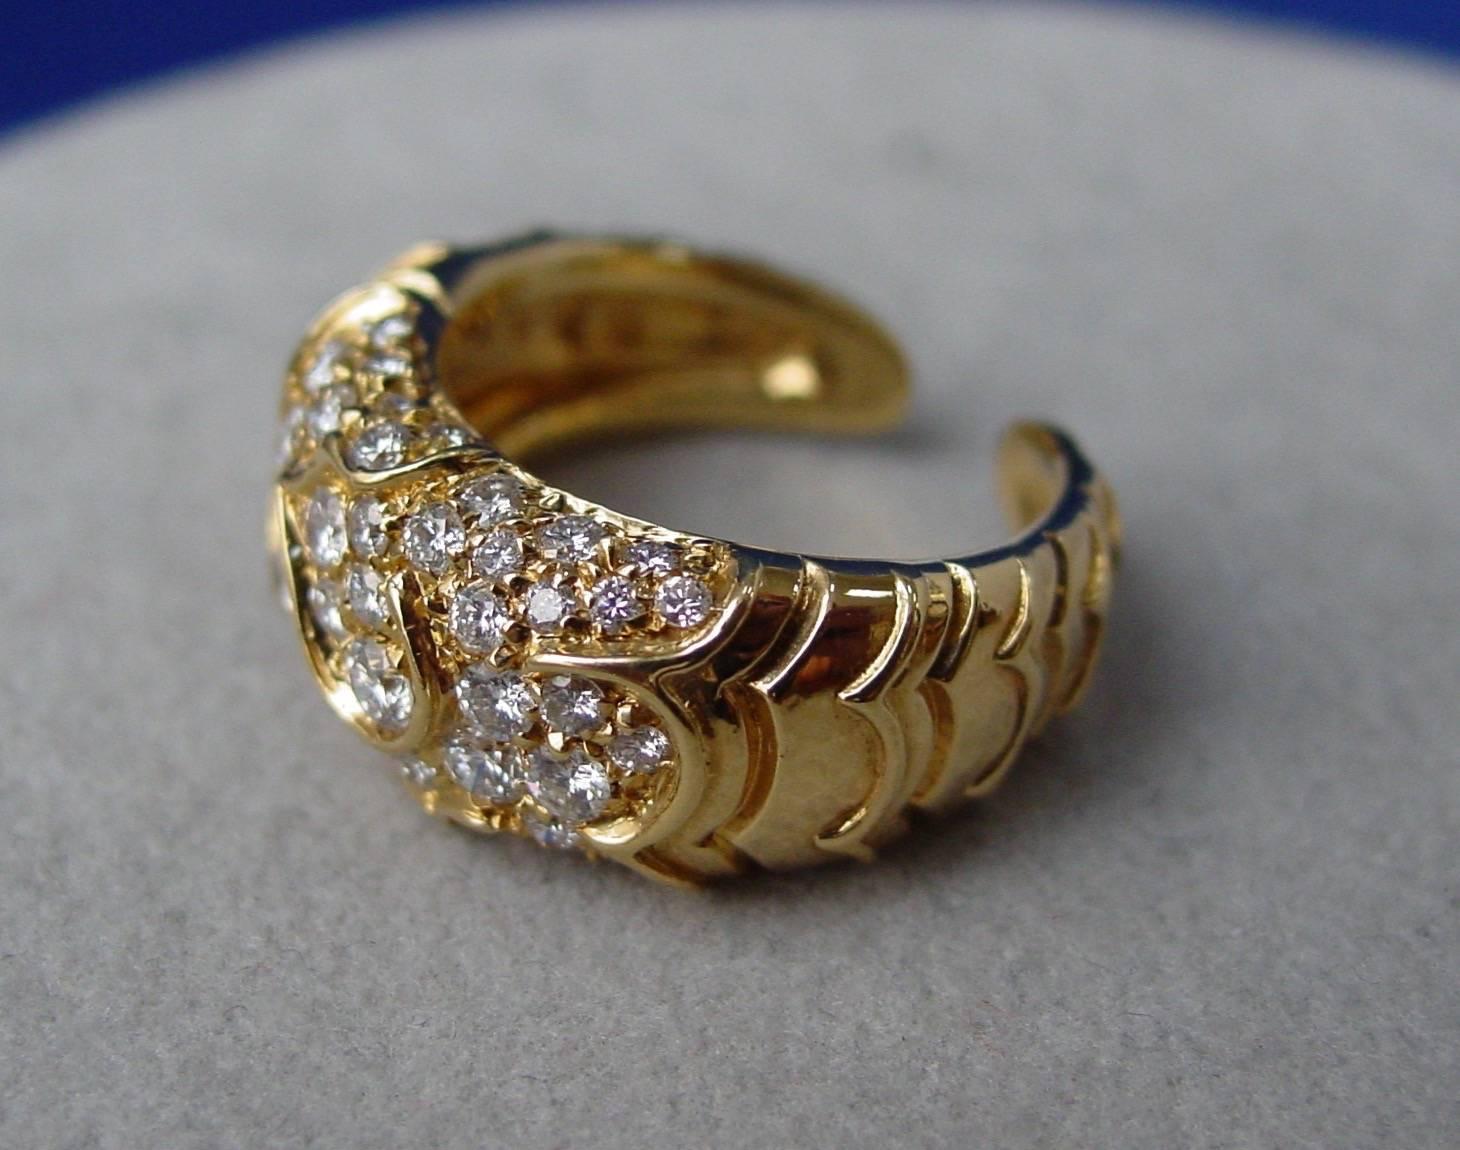 A Classic 18 Karat Yellow Gold and Pavé Onda Diamond Ring by Marina B. Set with approximately 1.50 carats of round brilliant diamonds. 